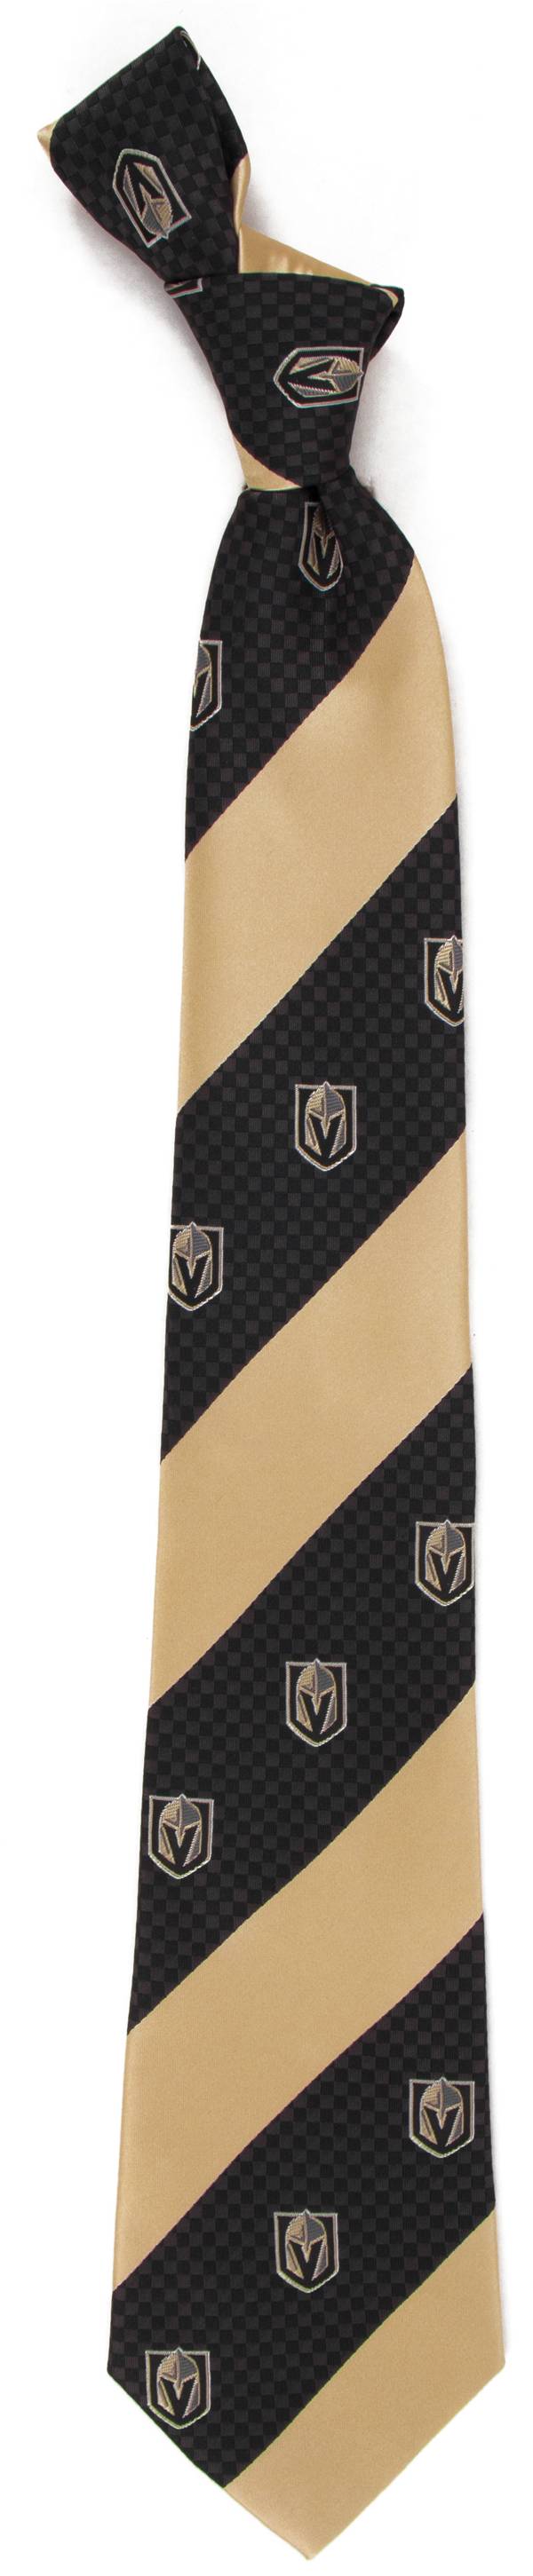 Eagles Wings Vegas Golden Knights Geo Stripe Necktie product image